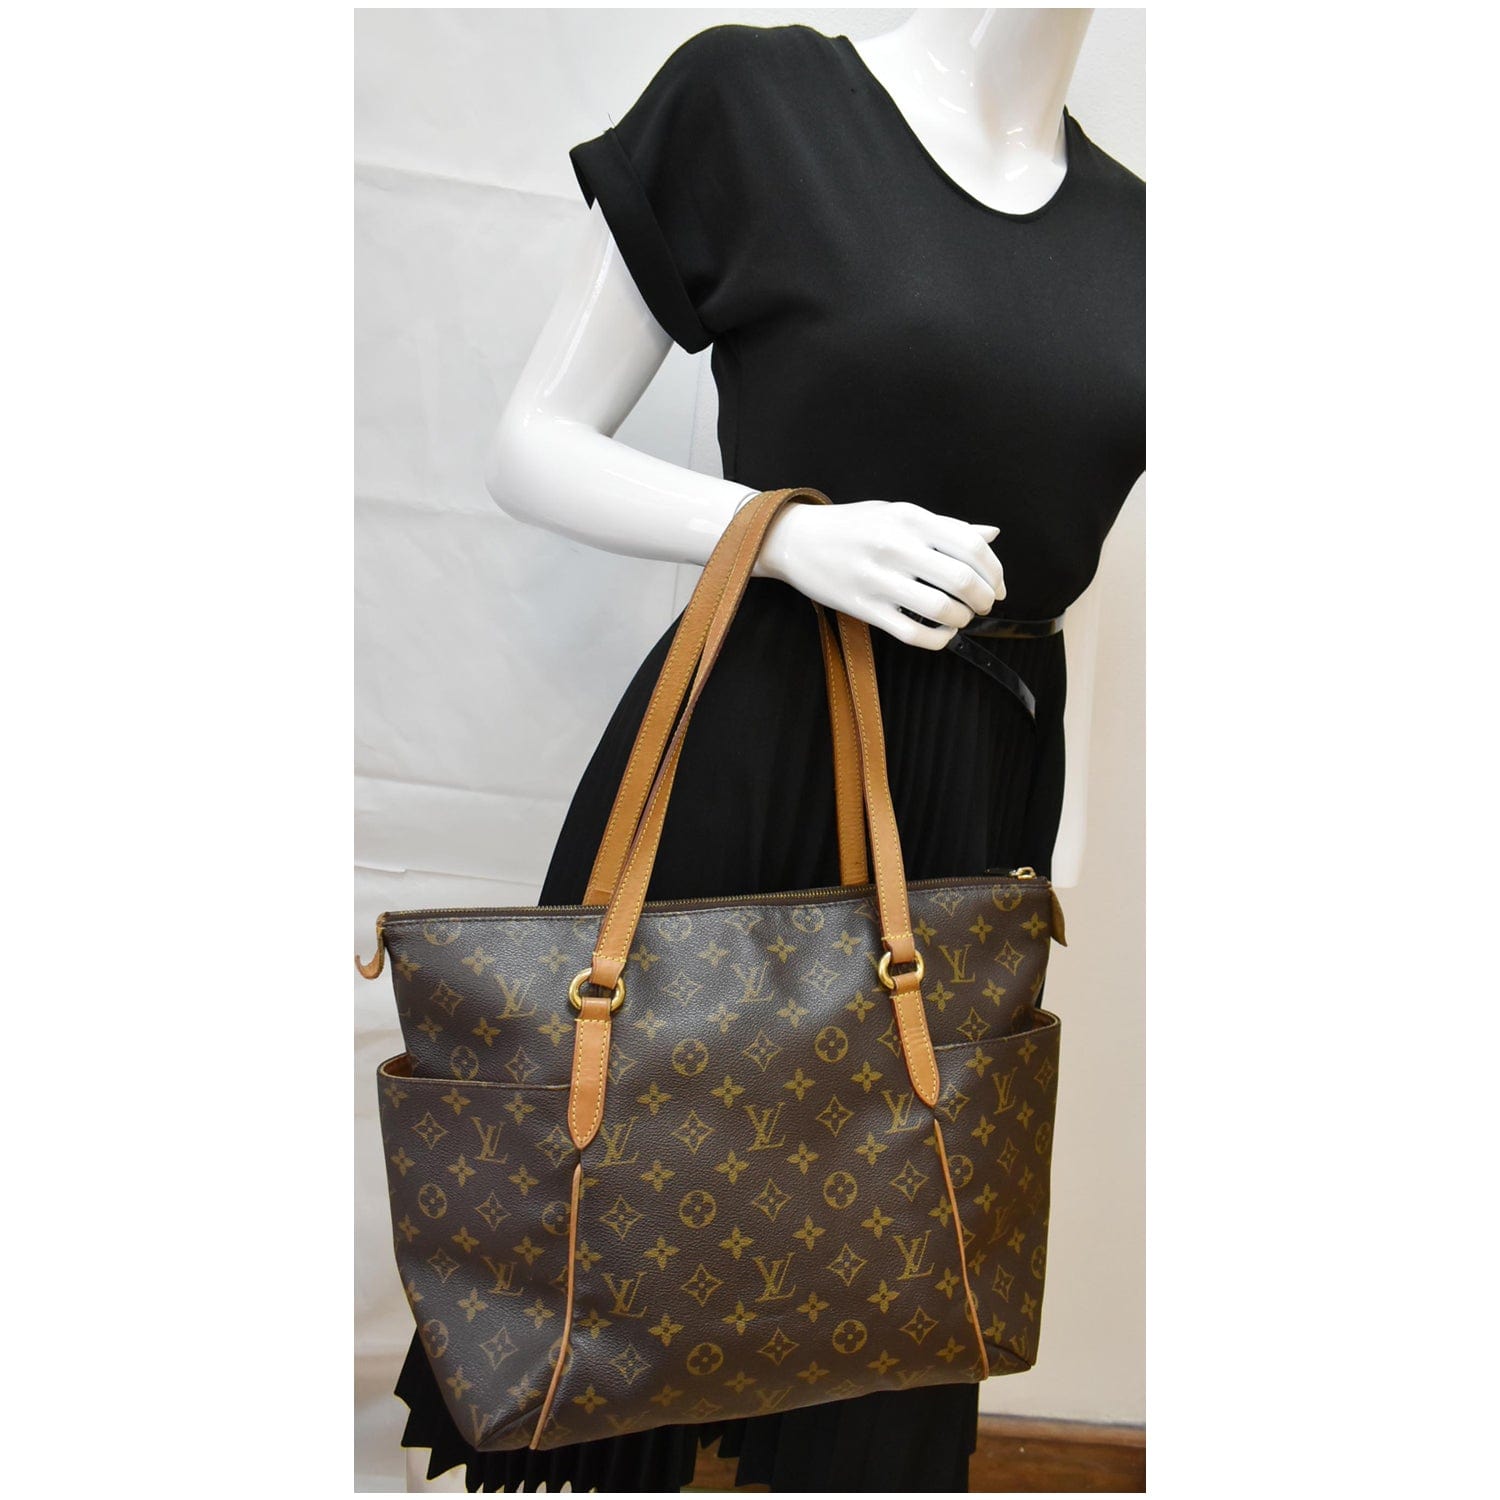 Louis Vuitton Totally Mm Shoulder Bag